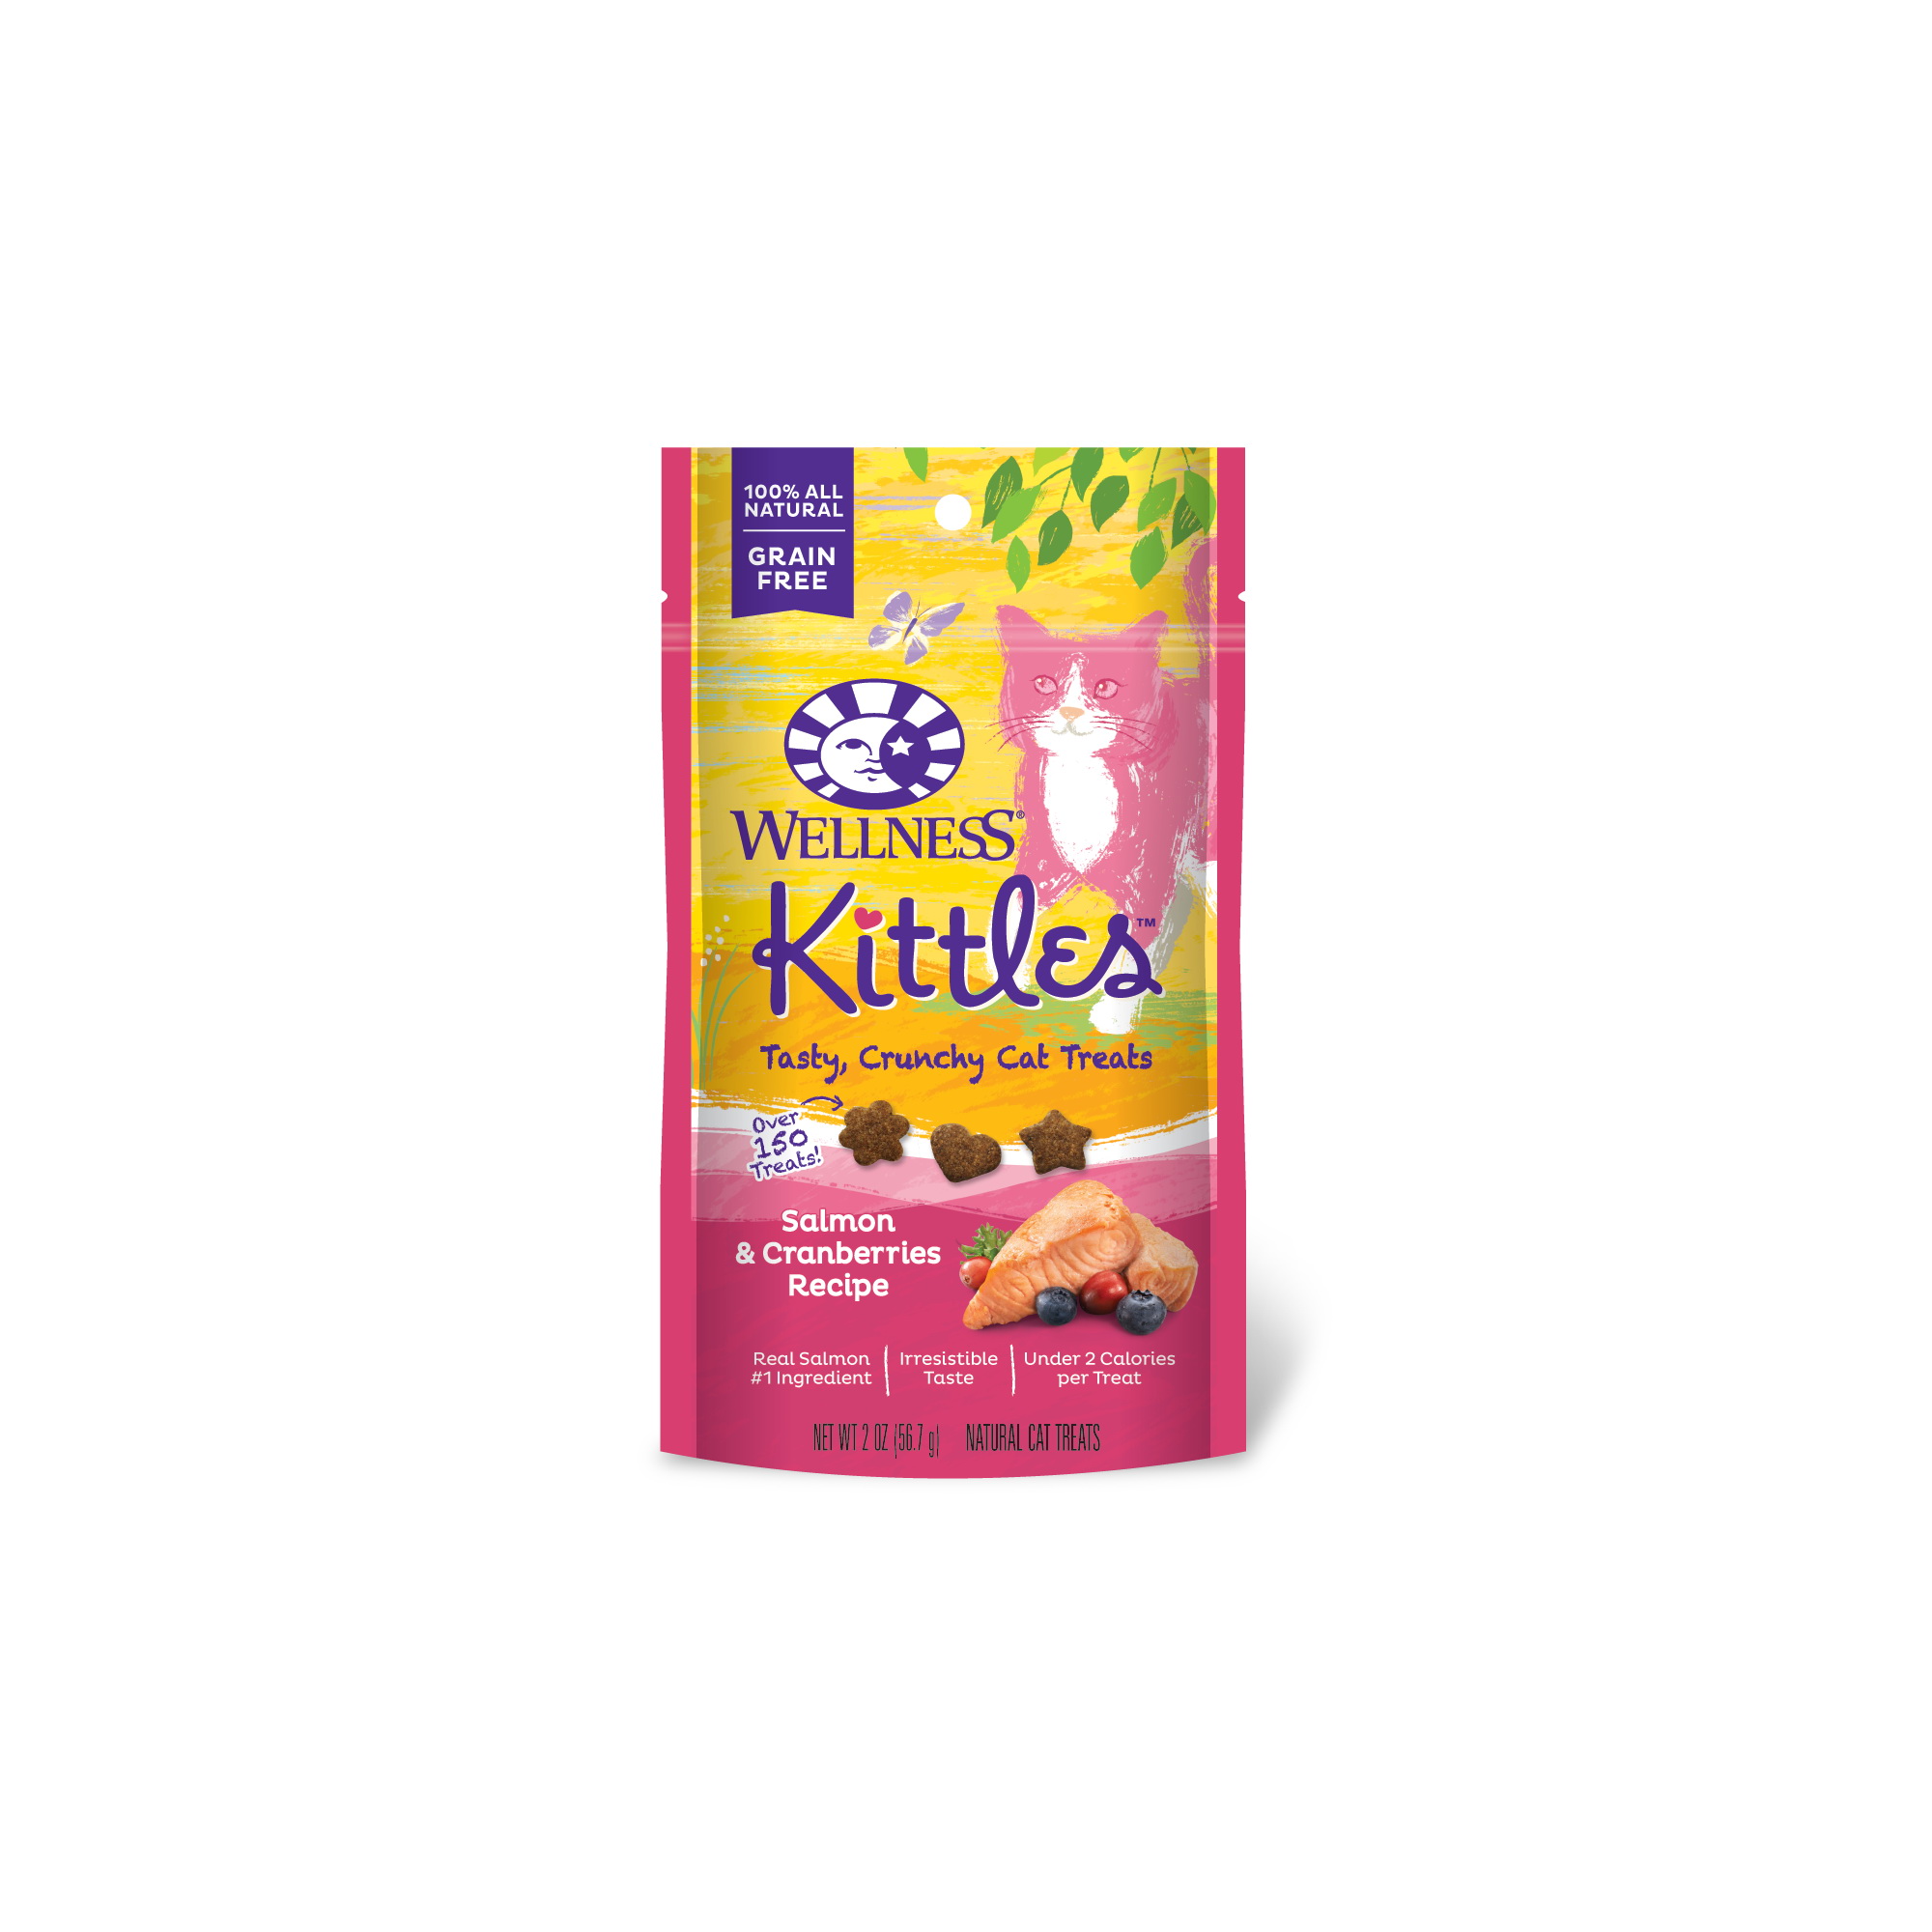 Wellness 90033 Kittles Cat Treat, Salmon, Cranberries Flavor, 2 oz Bag - 1